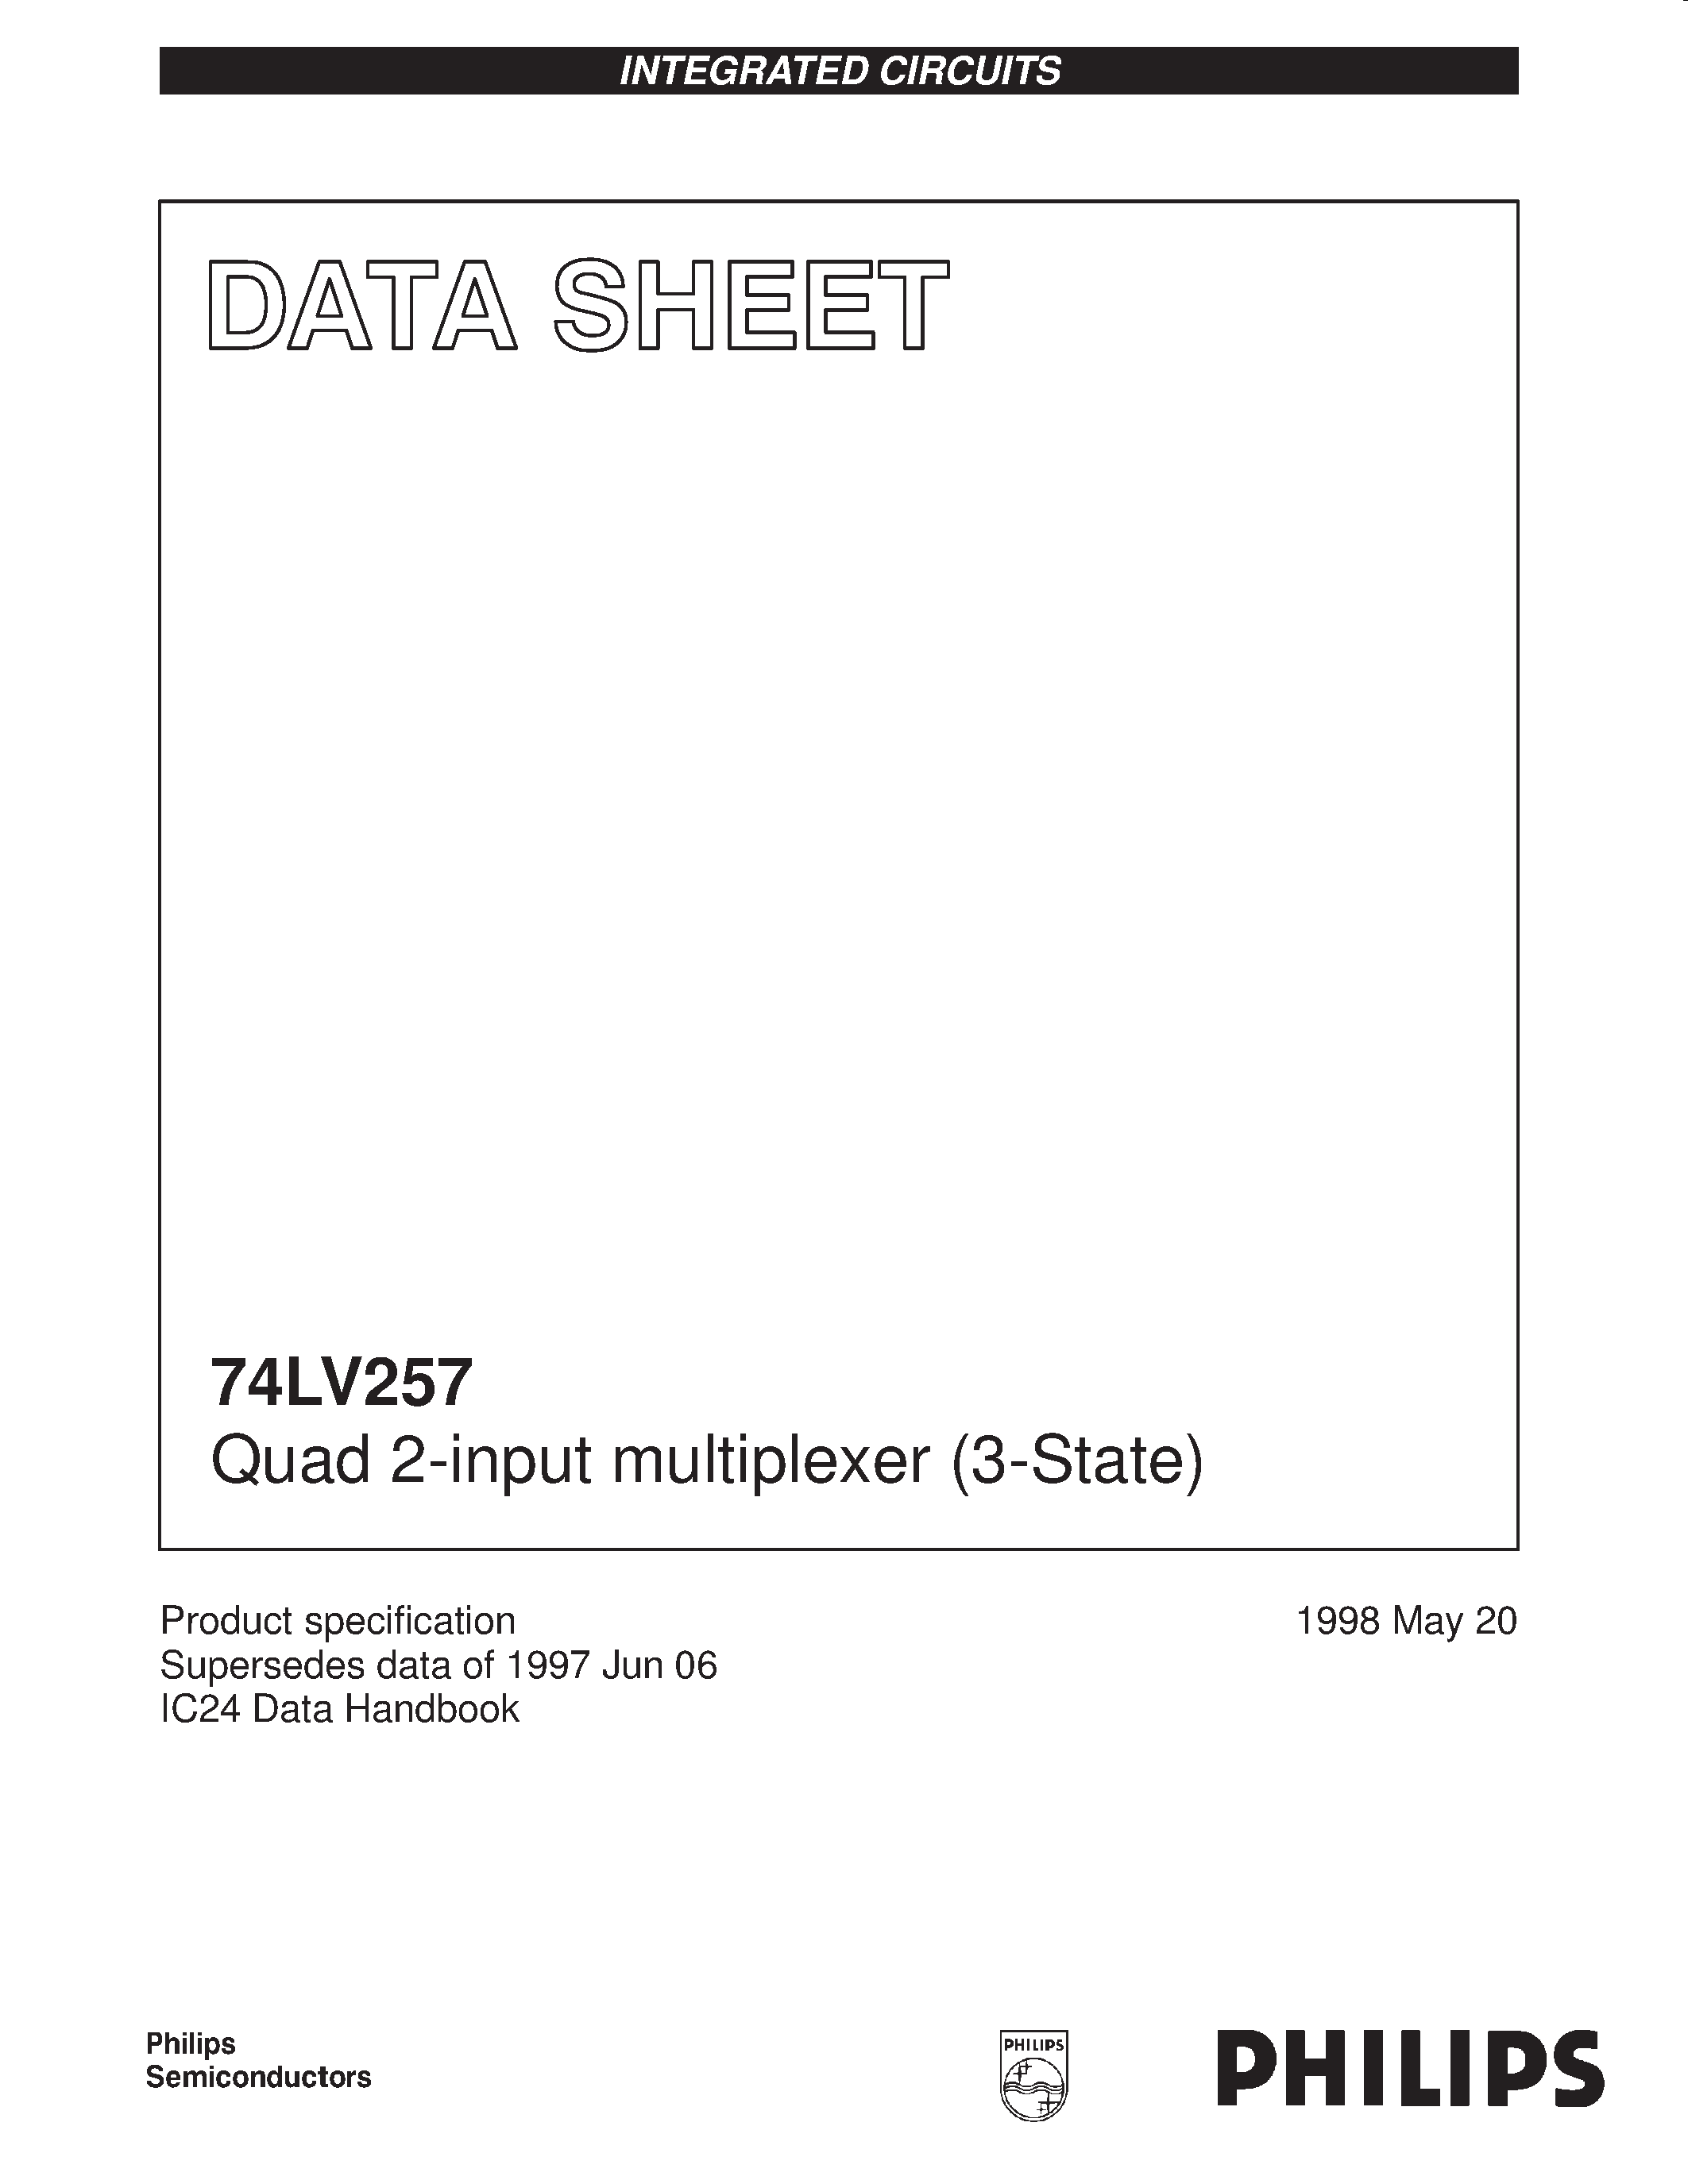 Datasheet 74LV257 - Quad 2-input multiplexer 3-State page 1